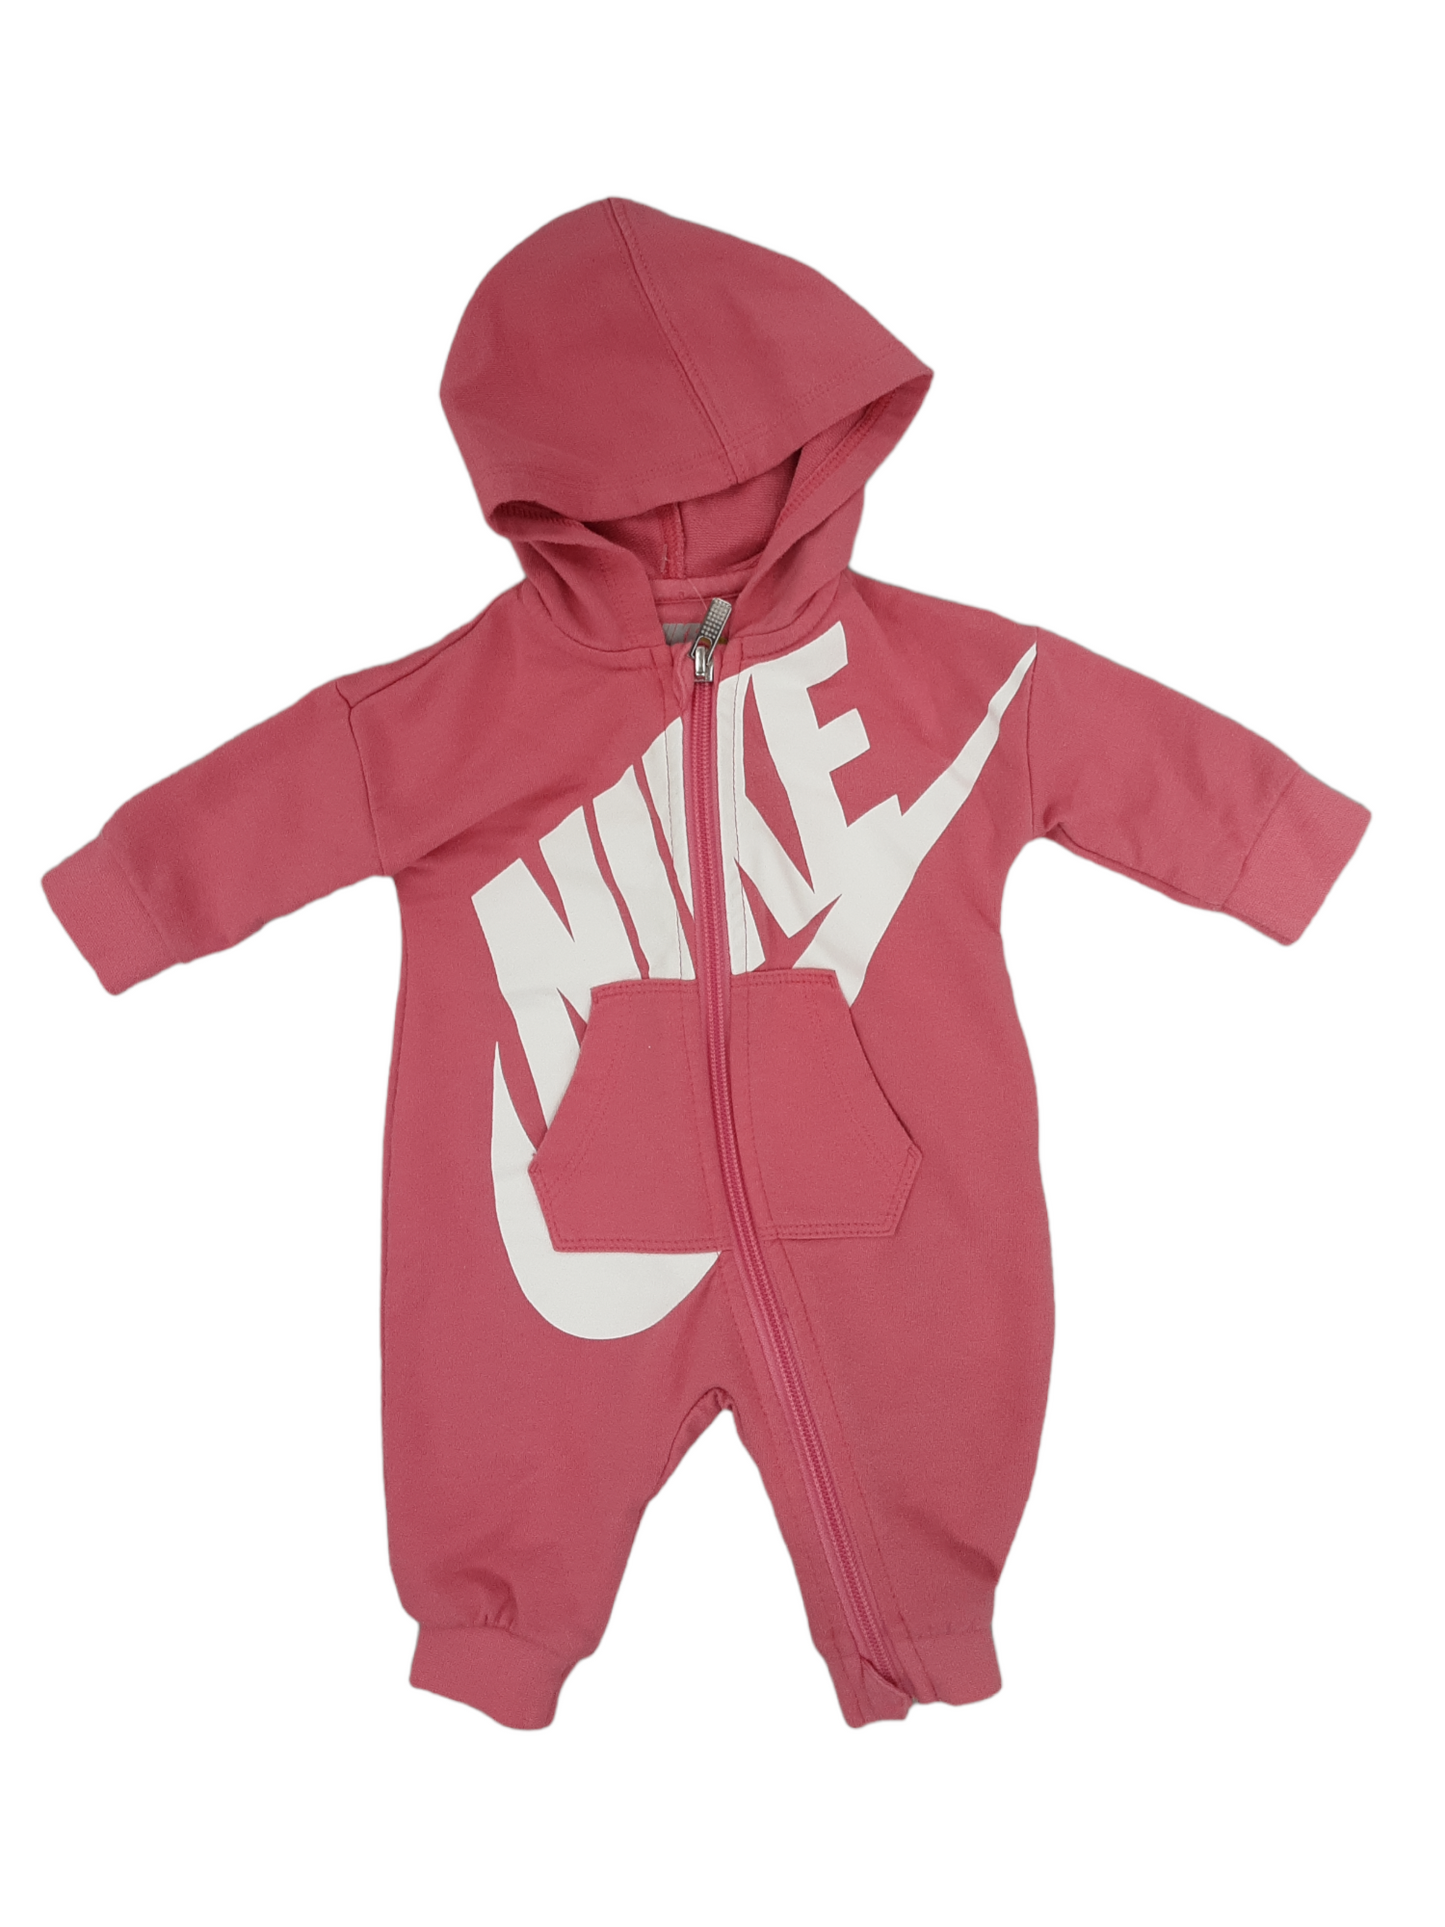 Hooded pink jumpsuit size newborn